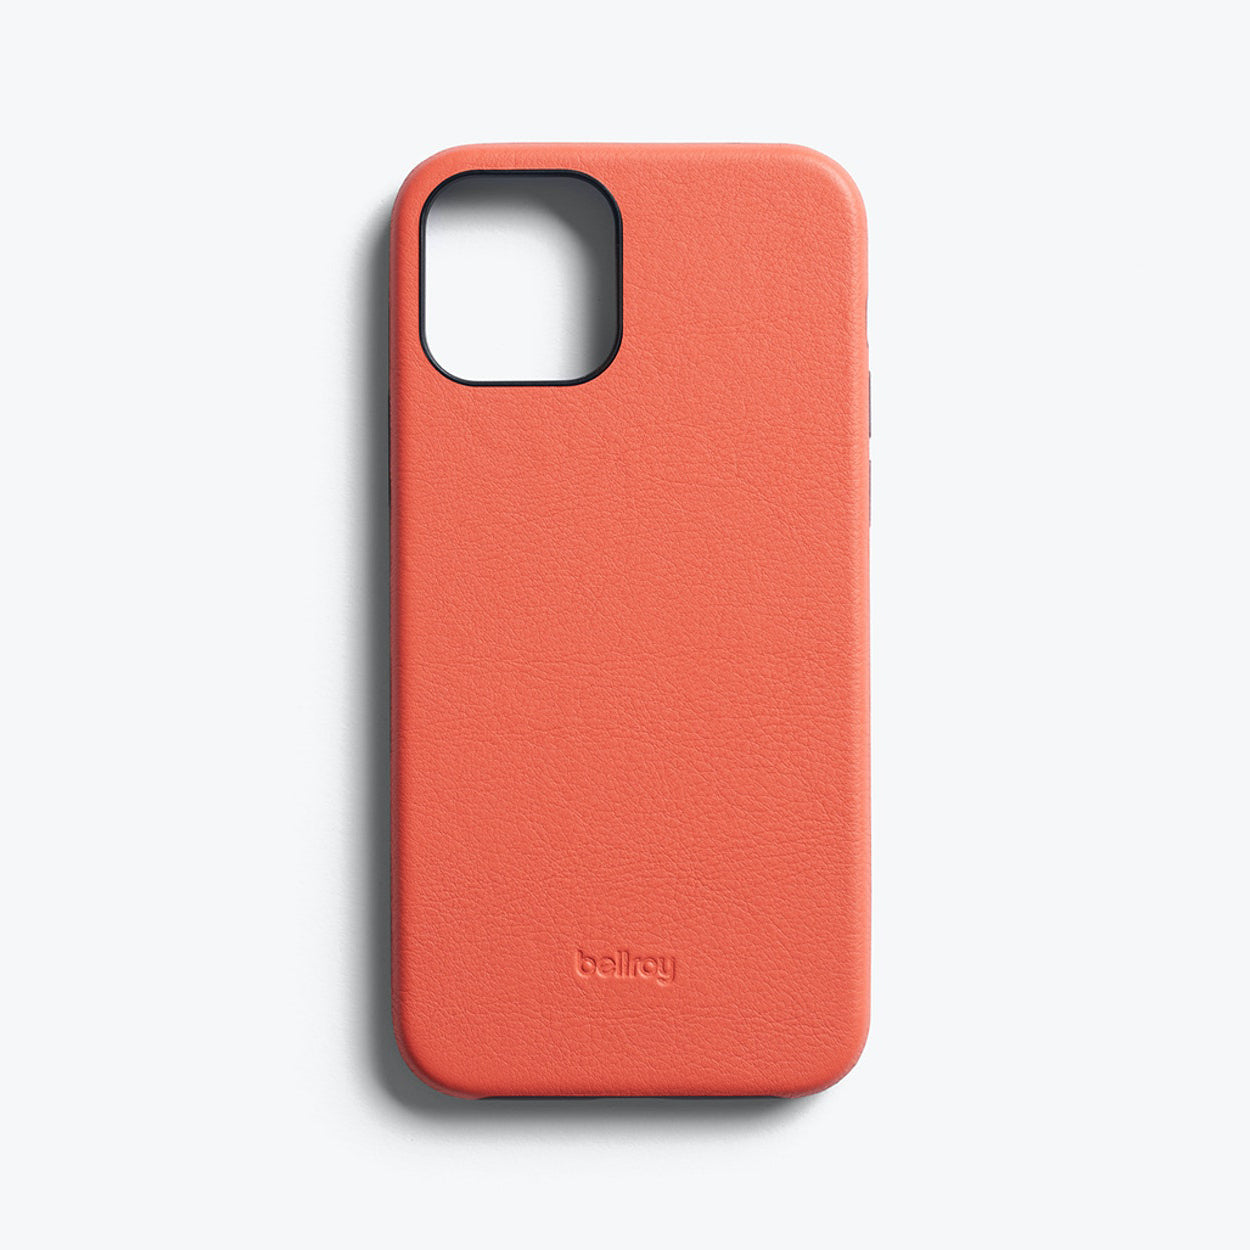 Bellroy Slim Genuine Leather Case For iPhone iPhone 12 mini - CORAL - Mac Addict